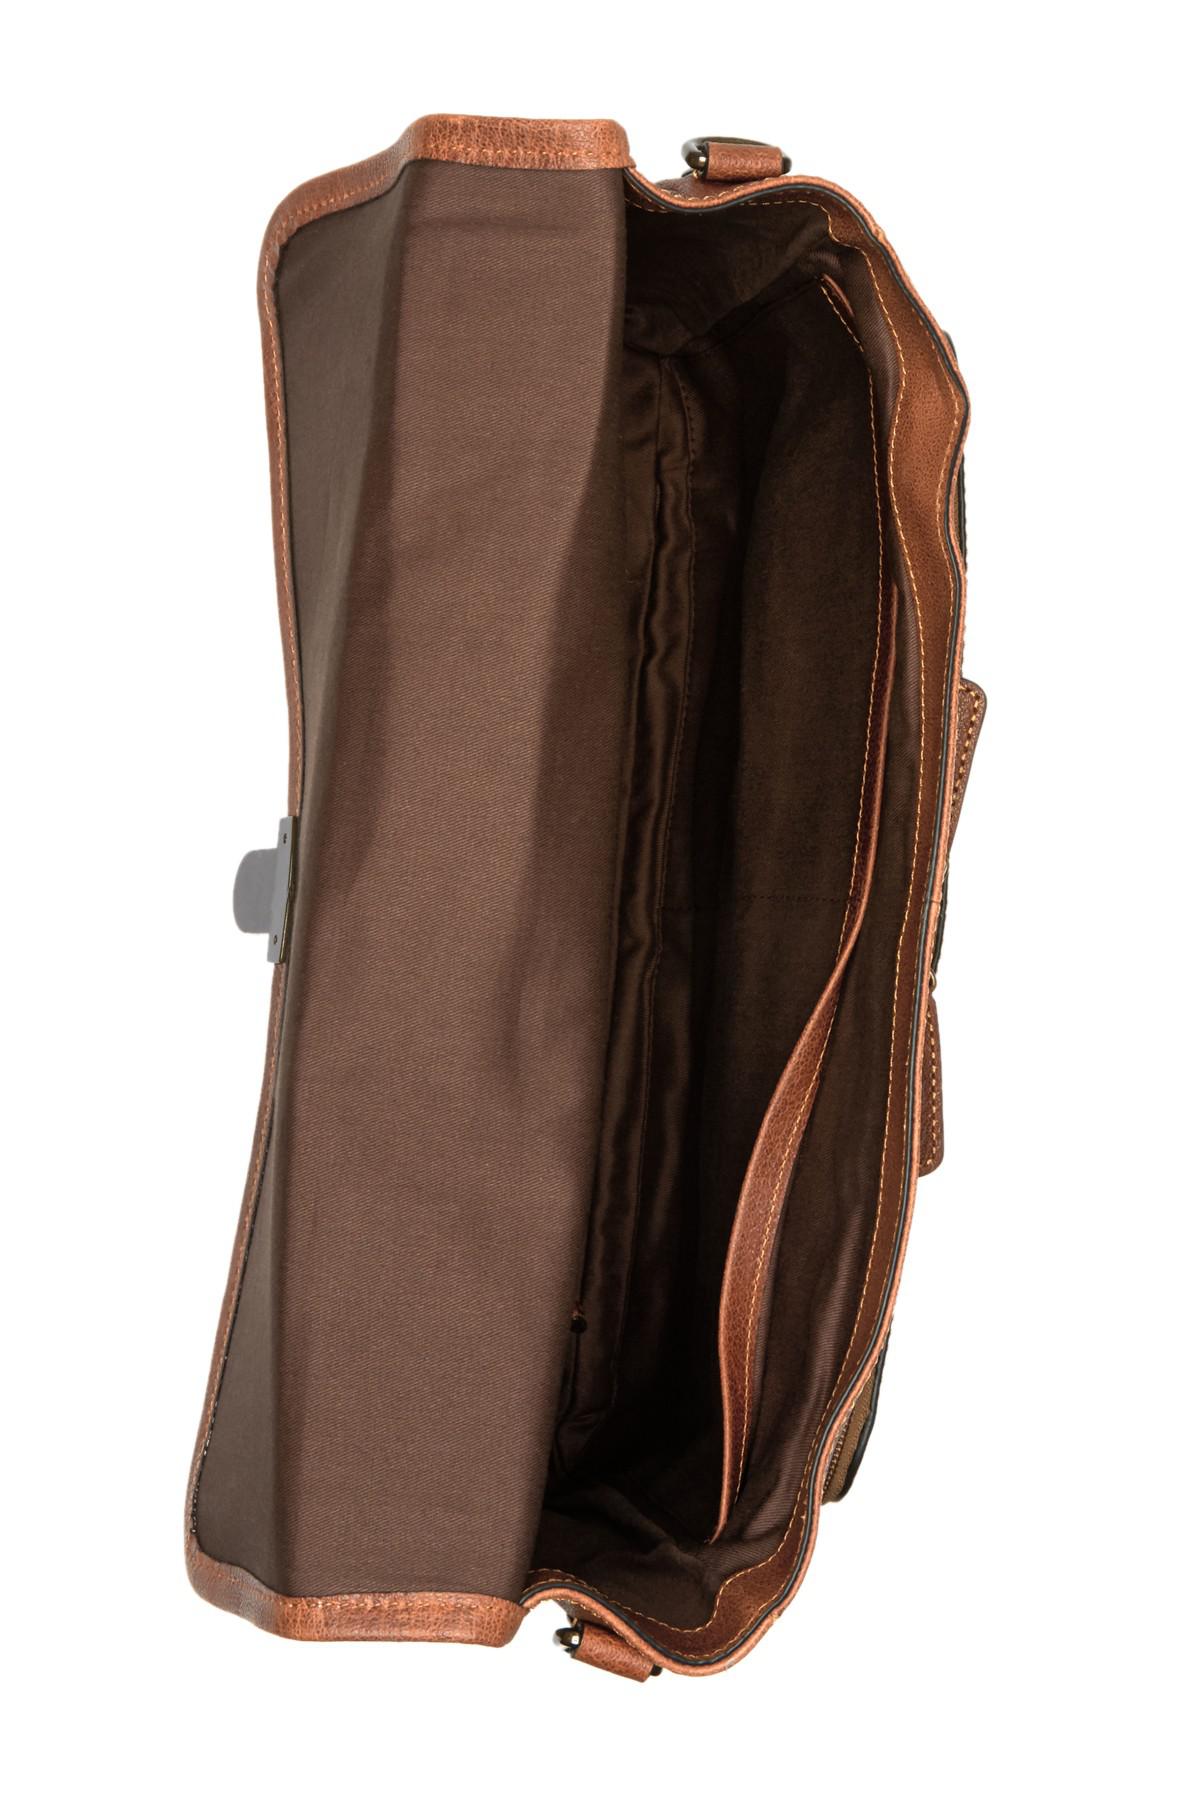 Frye Luke Leather Messenger Bag in Tan (Brown) for Men - Lyst